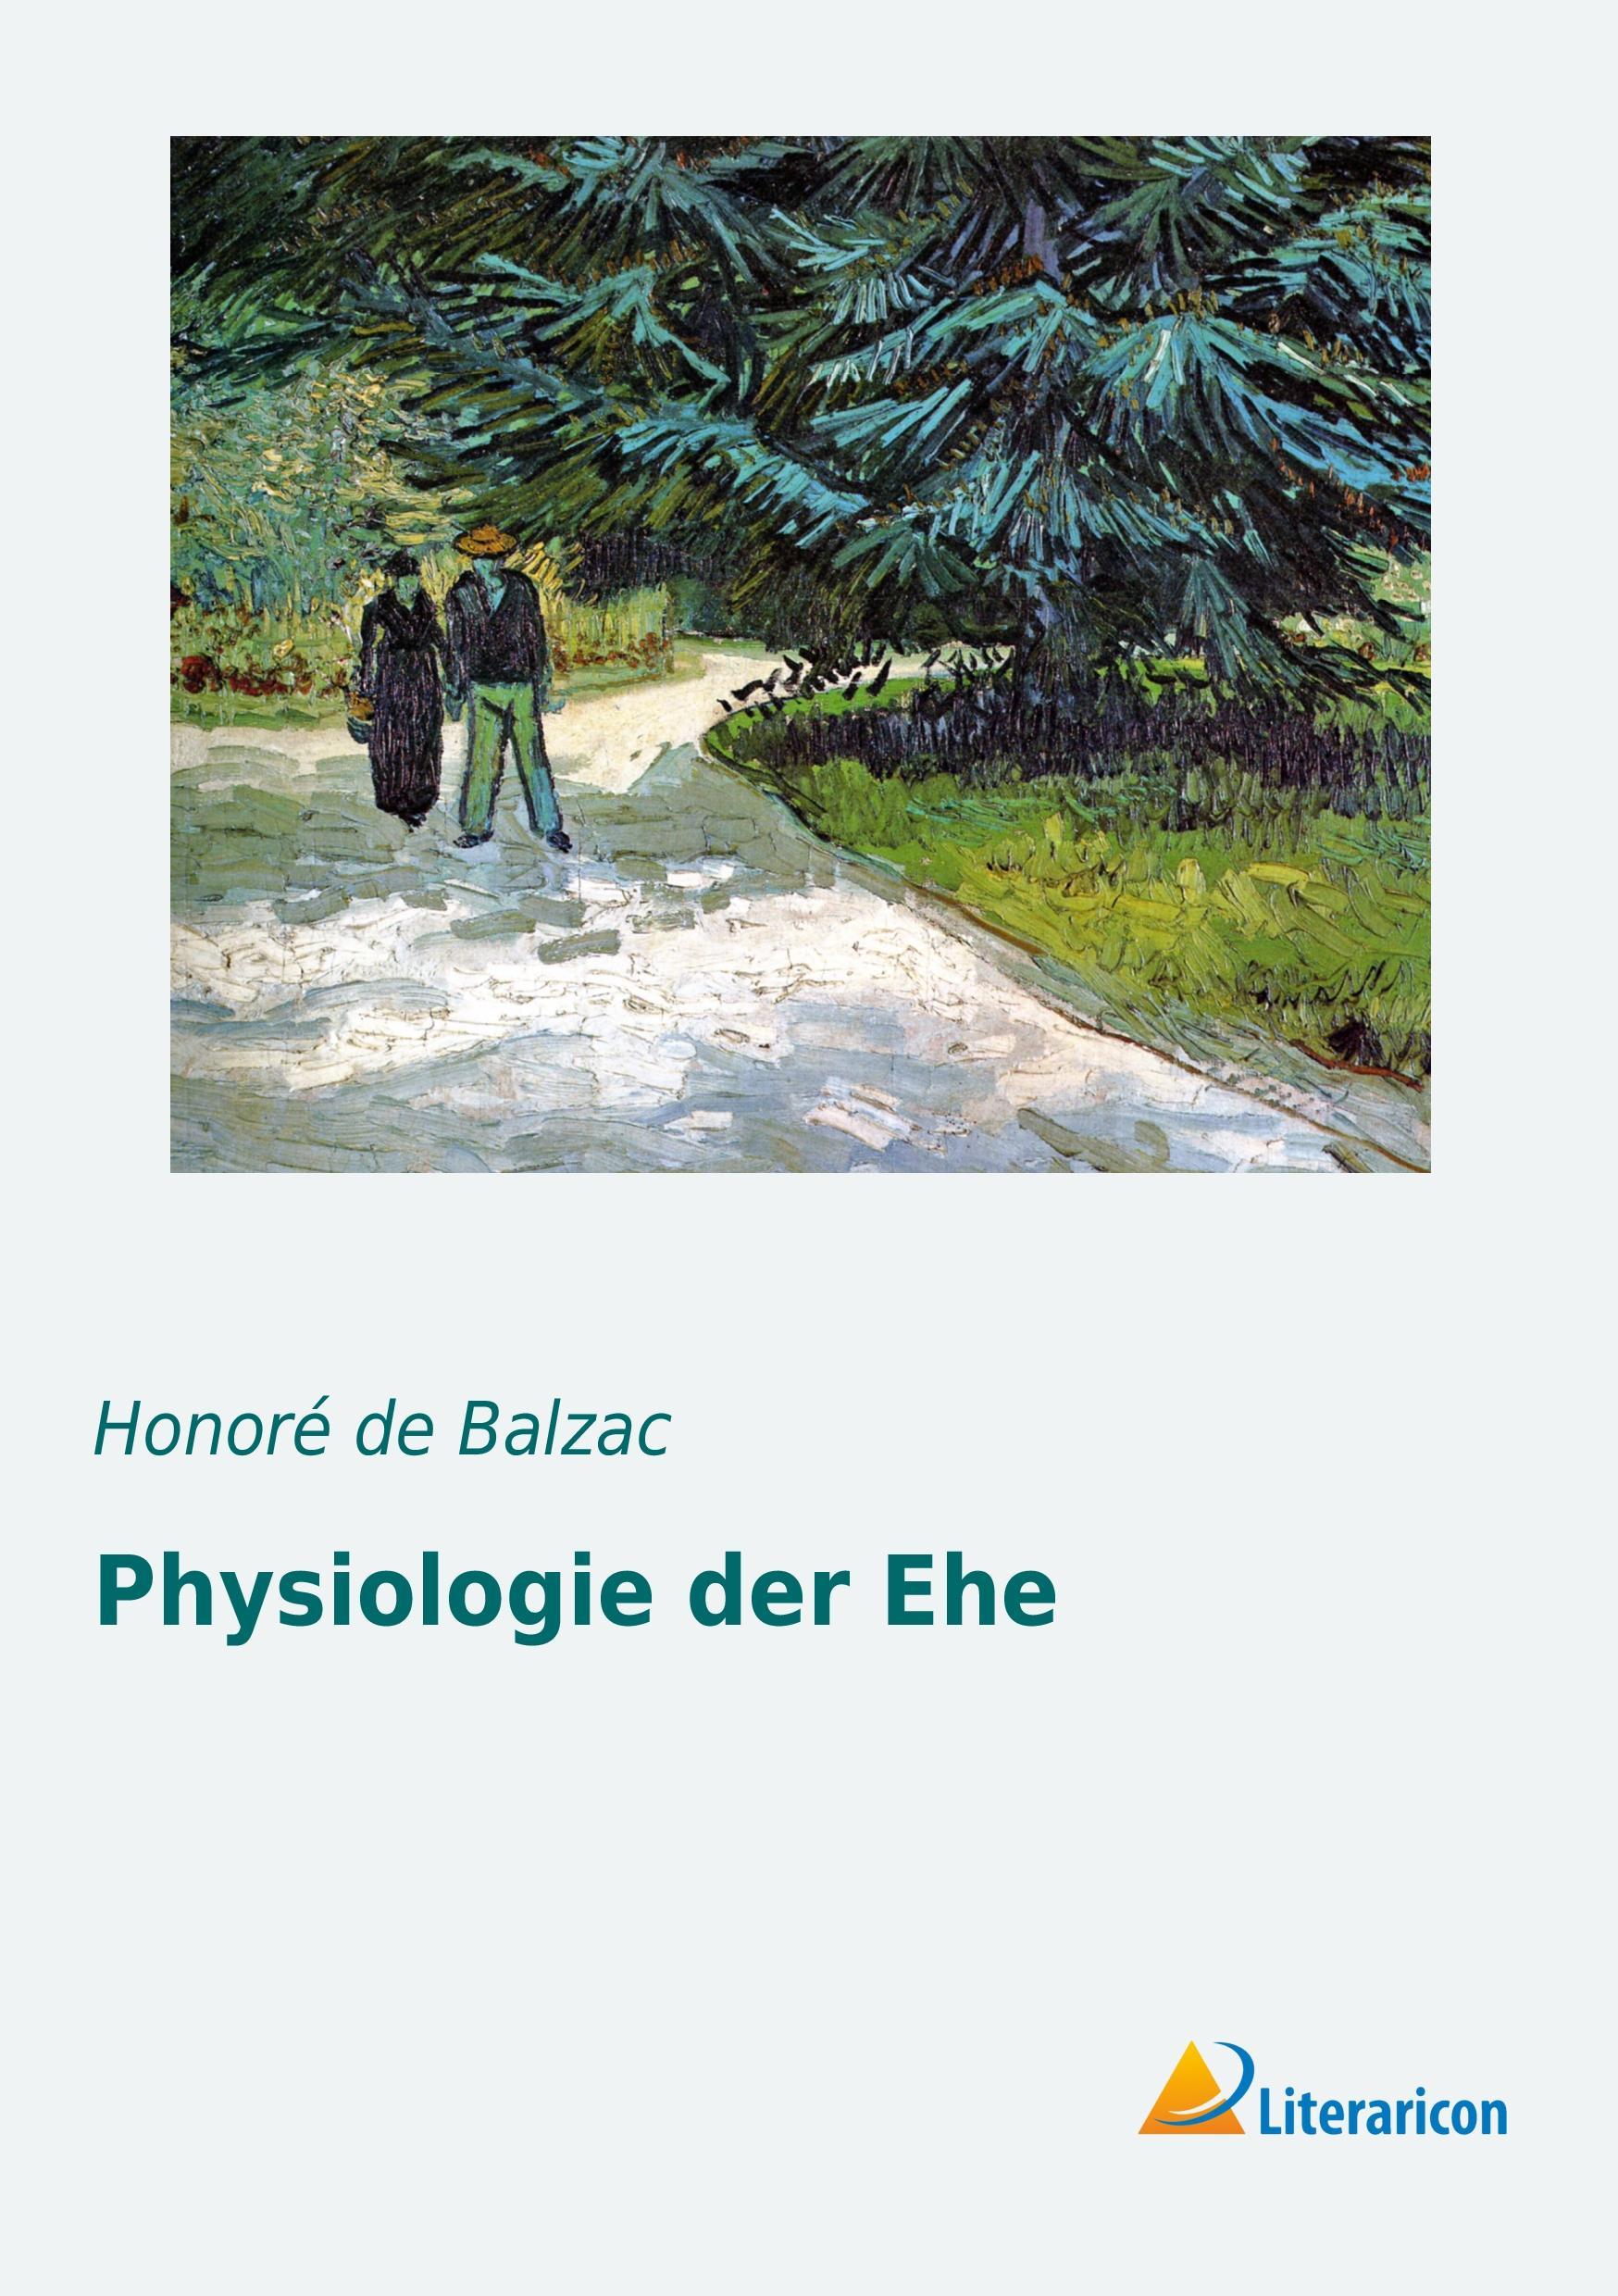 Physiologie der Ehe / HonorÃ© de Balzac / Taschenbuch / Paperback / 320 S. / Deutsch / 2016 / Literaricon Verlag / EAN 9783956976575 - Balzac, HonorÃ© de